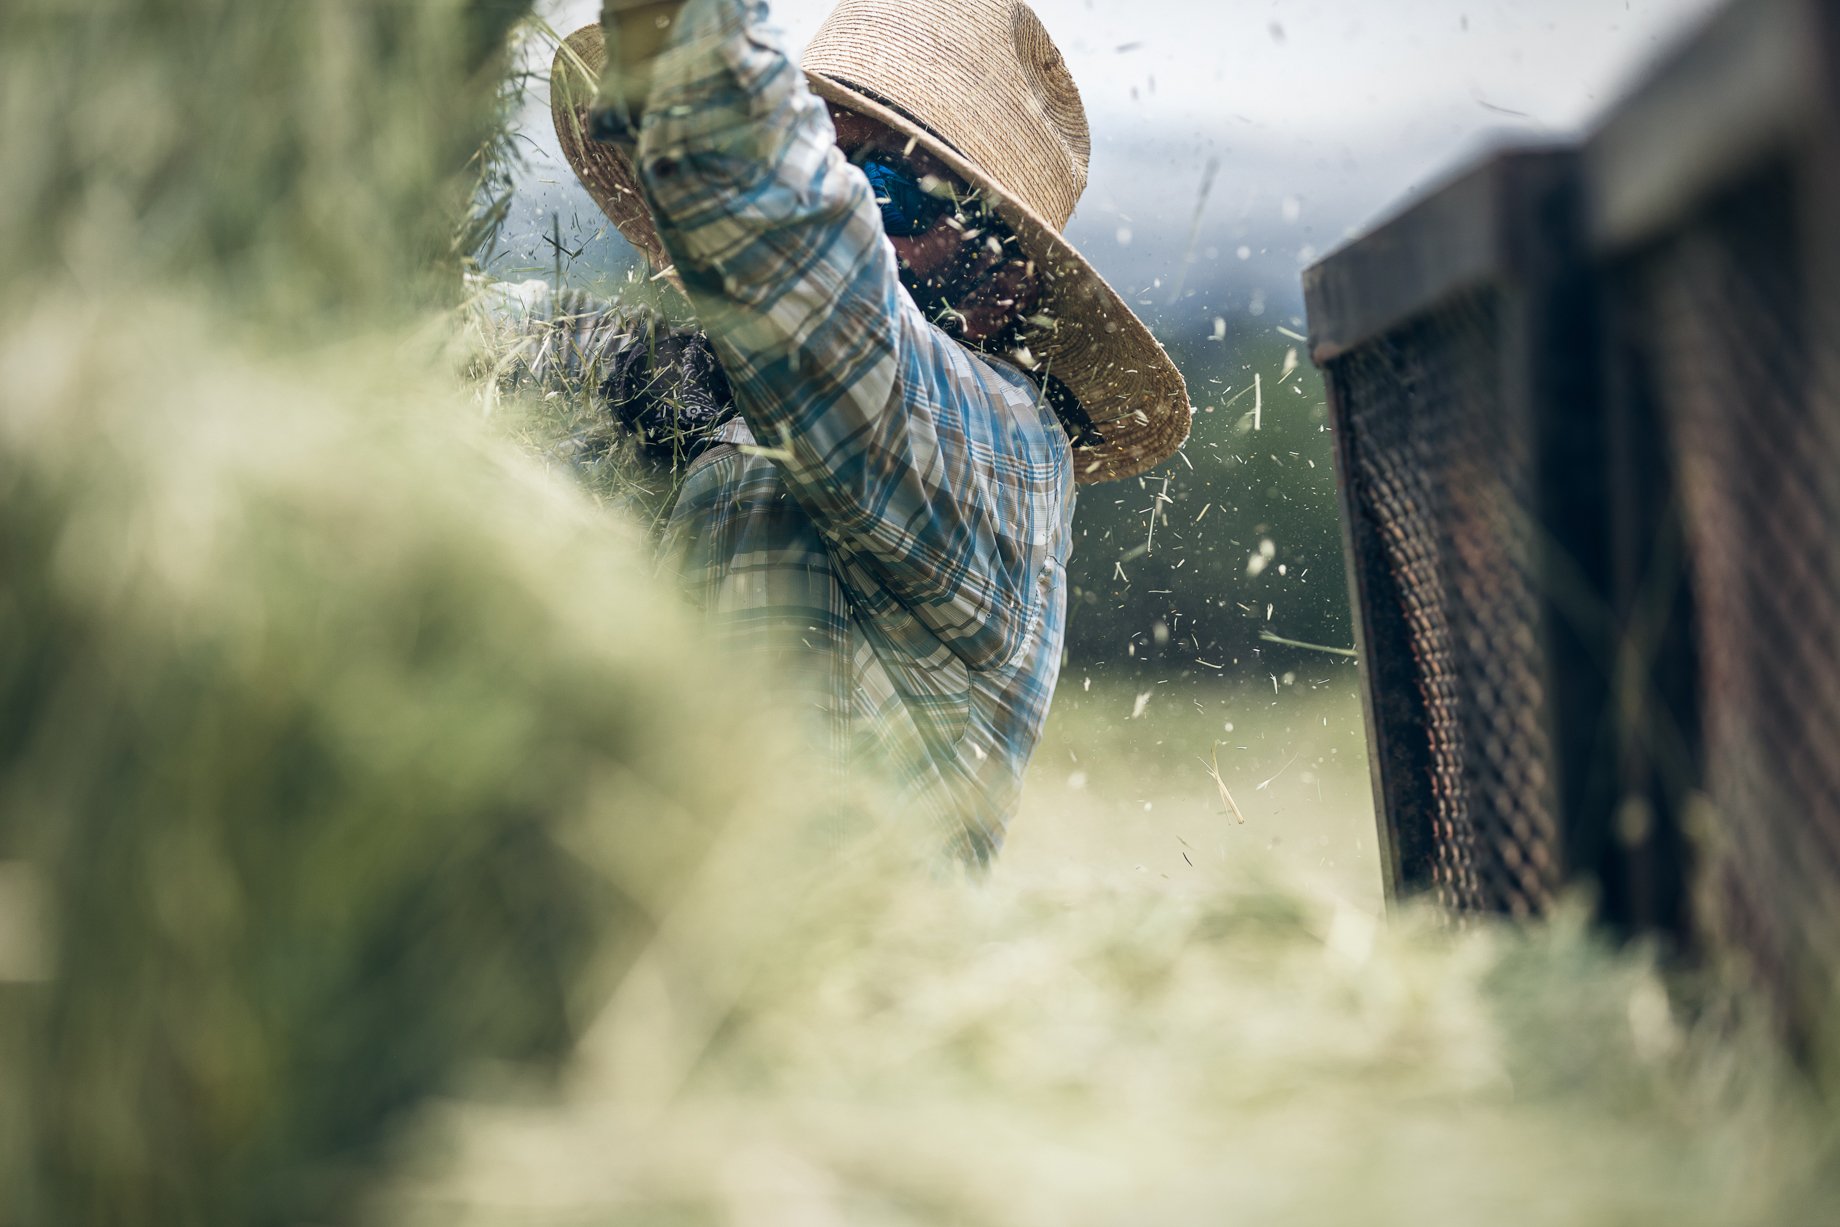 Hay flies as farmer loads truck at Howard Creek Farm shot by Doug Gritzmacher